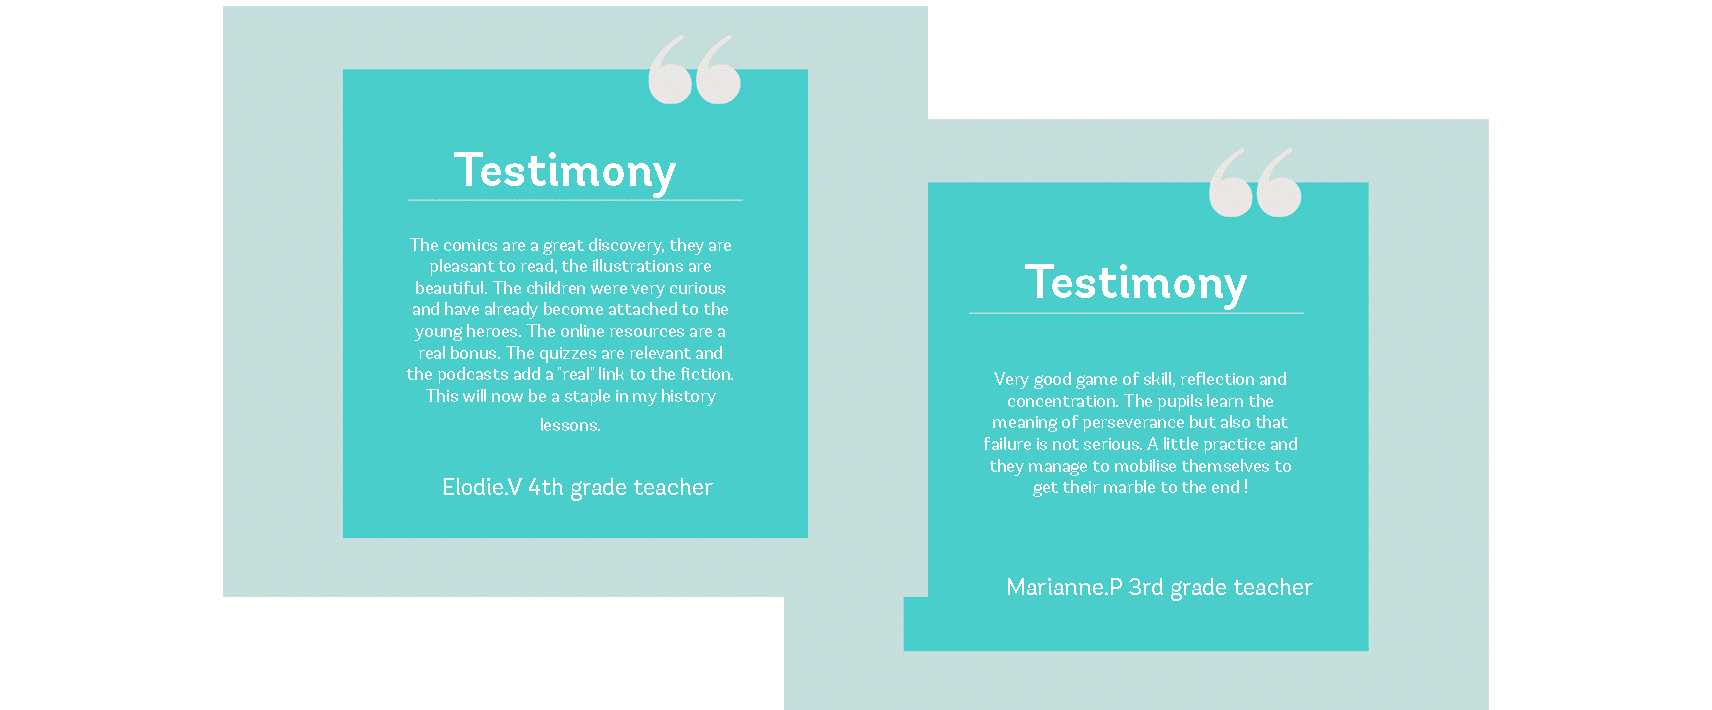 teacher-testimony